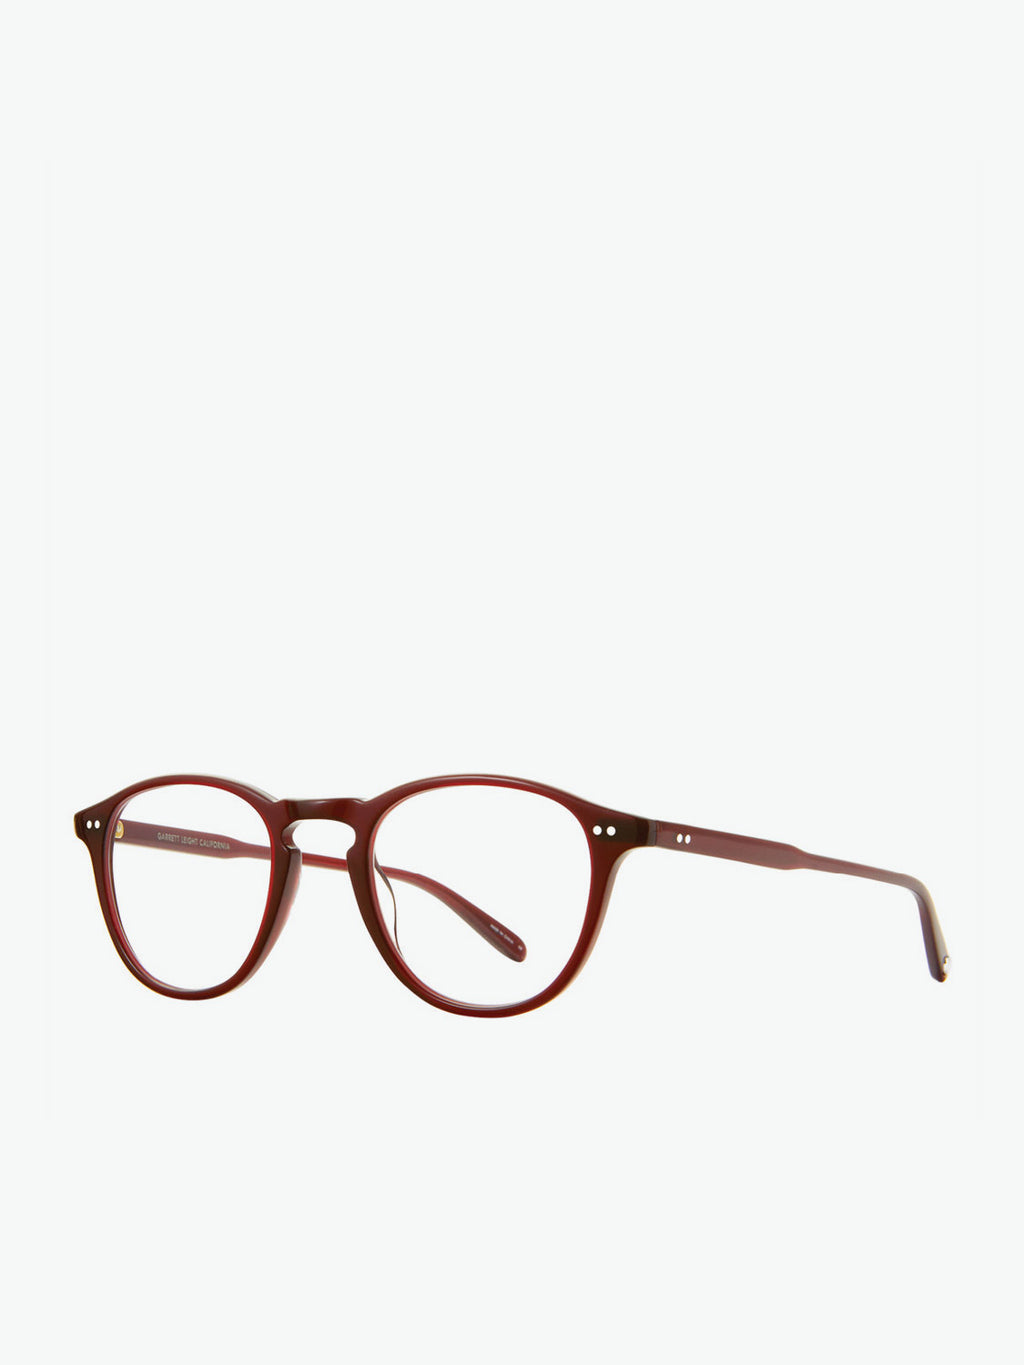 Garrett Leight California | Men's Eyewear and Sunglasses